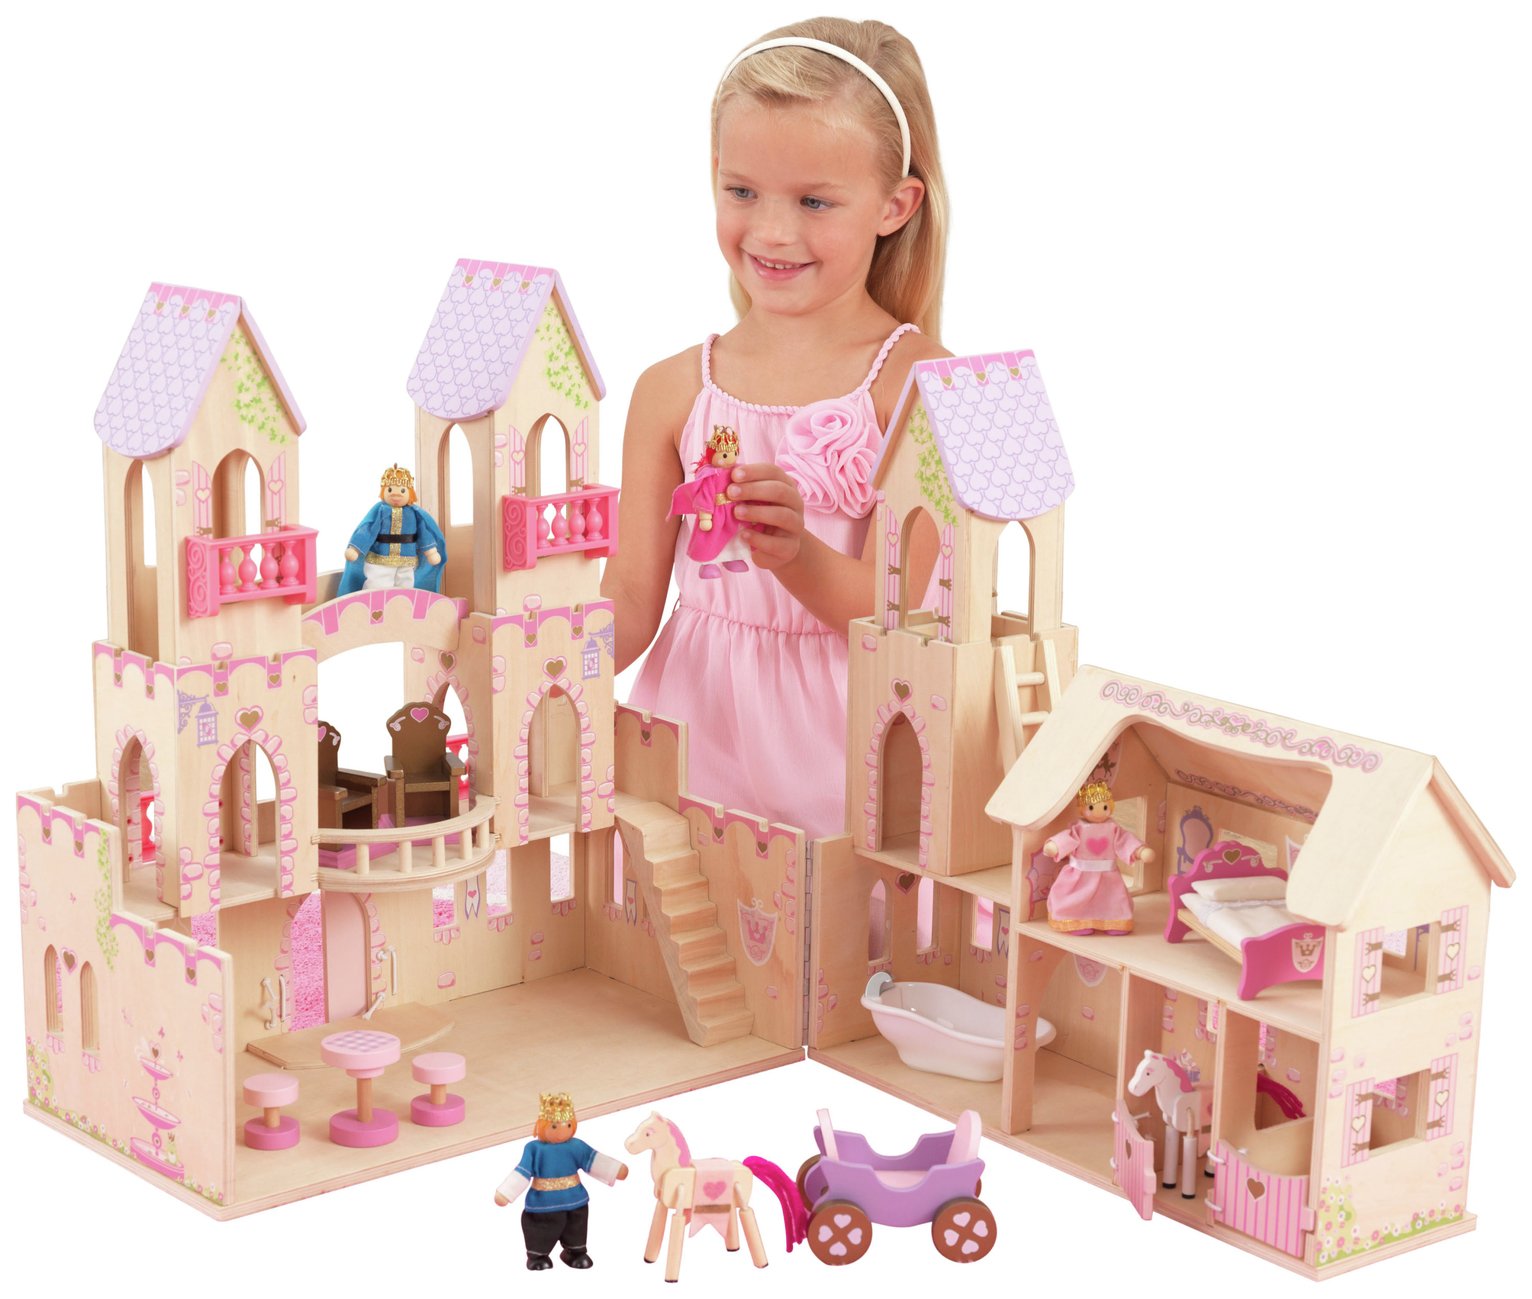 KidKraft Princess Castle Wooden Dolls House Review